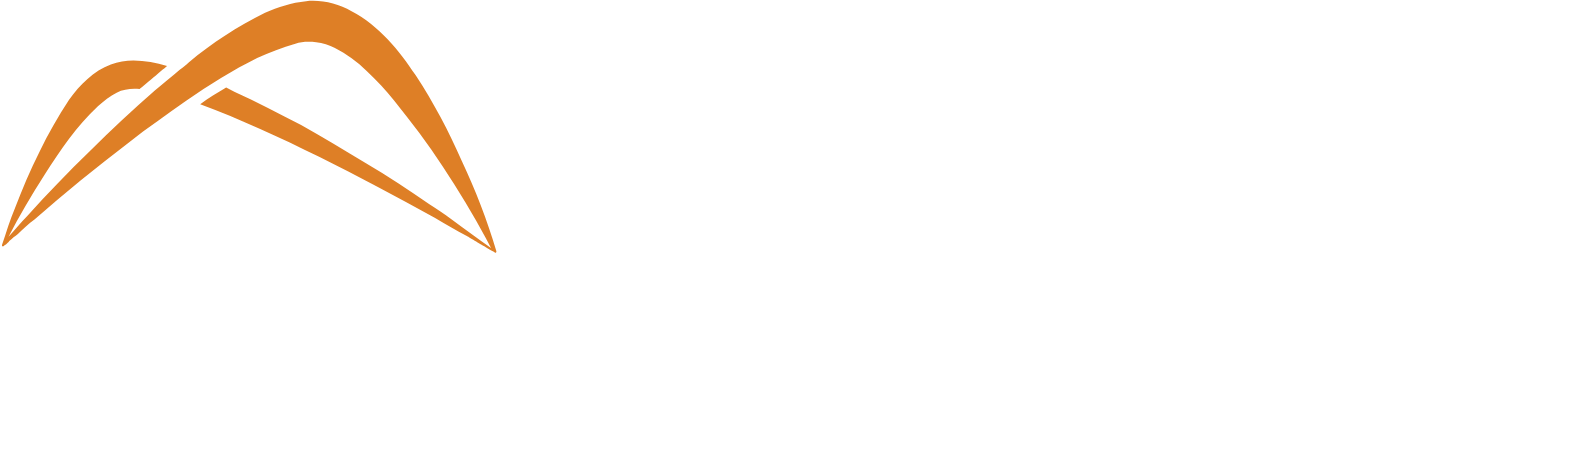 MP Materials Logo groß für dunkle Hintergründe (transparentes PNG)